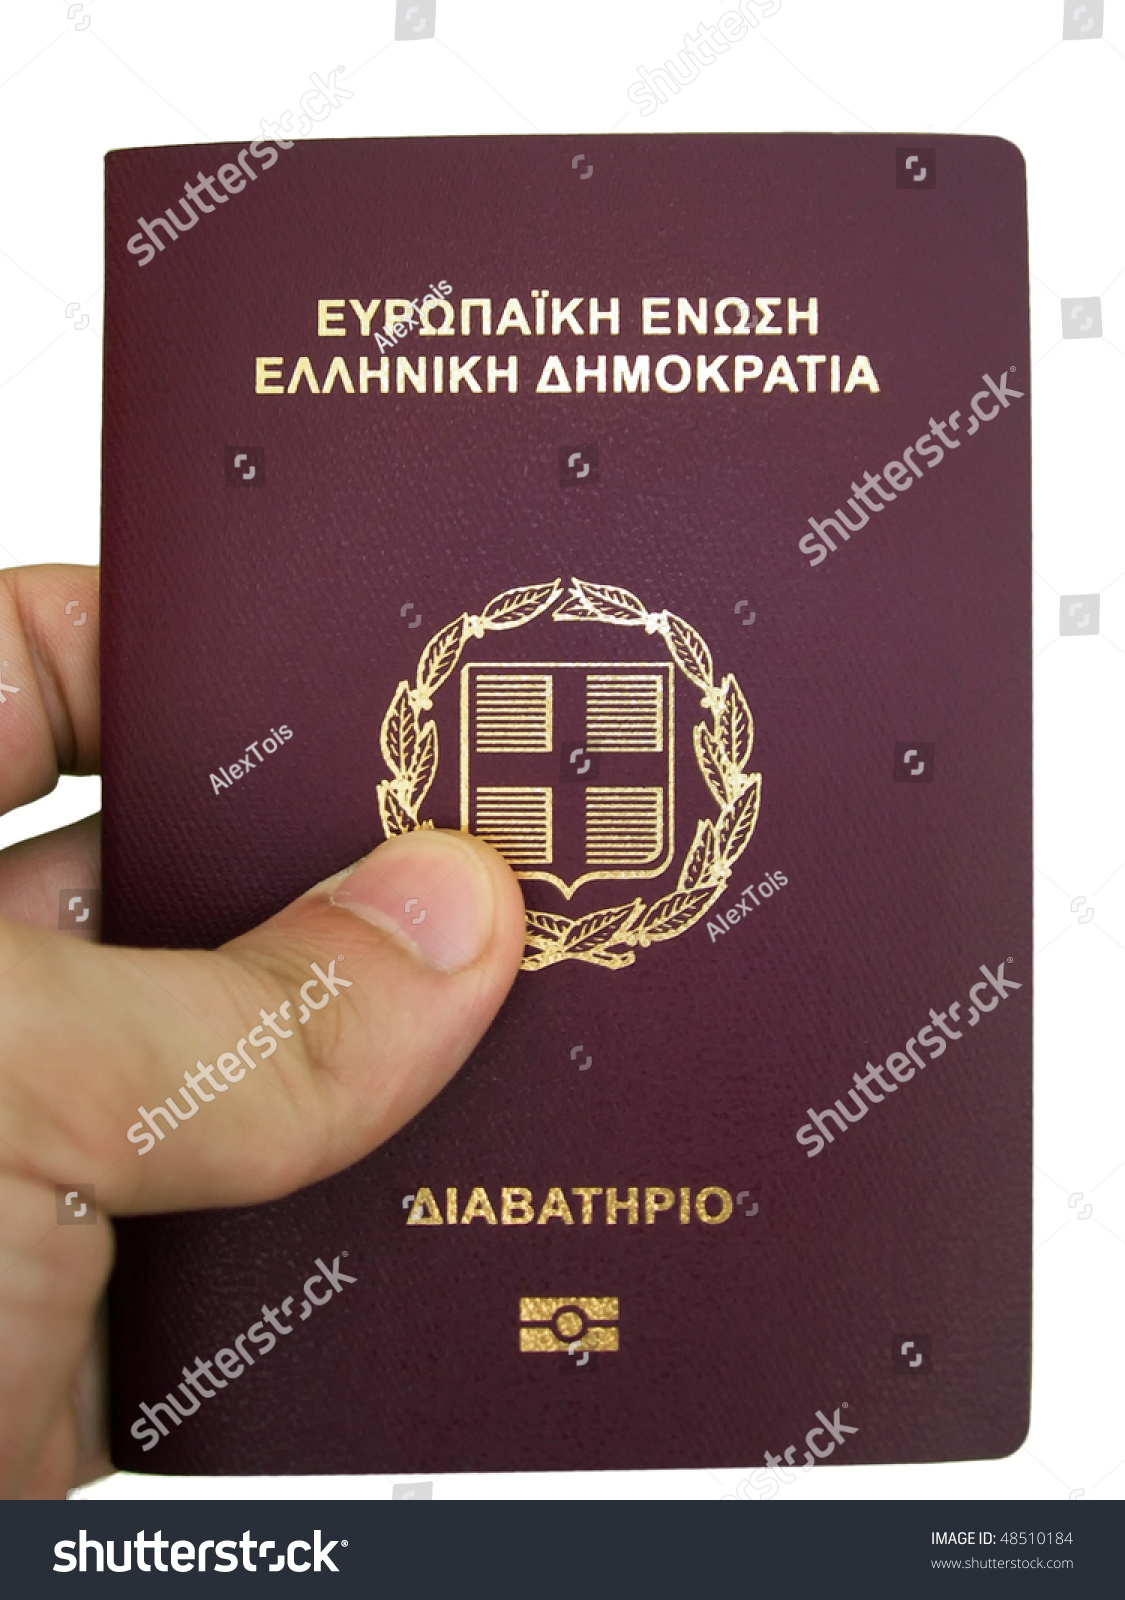 Image result for GREEK PASSPORT